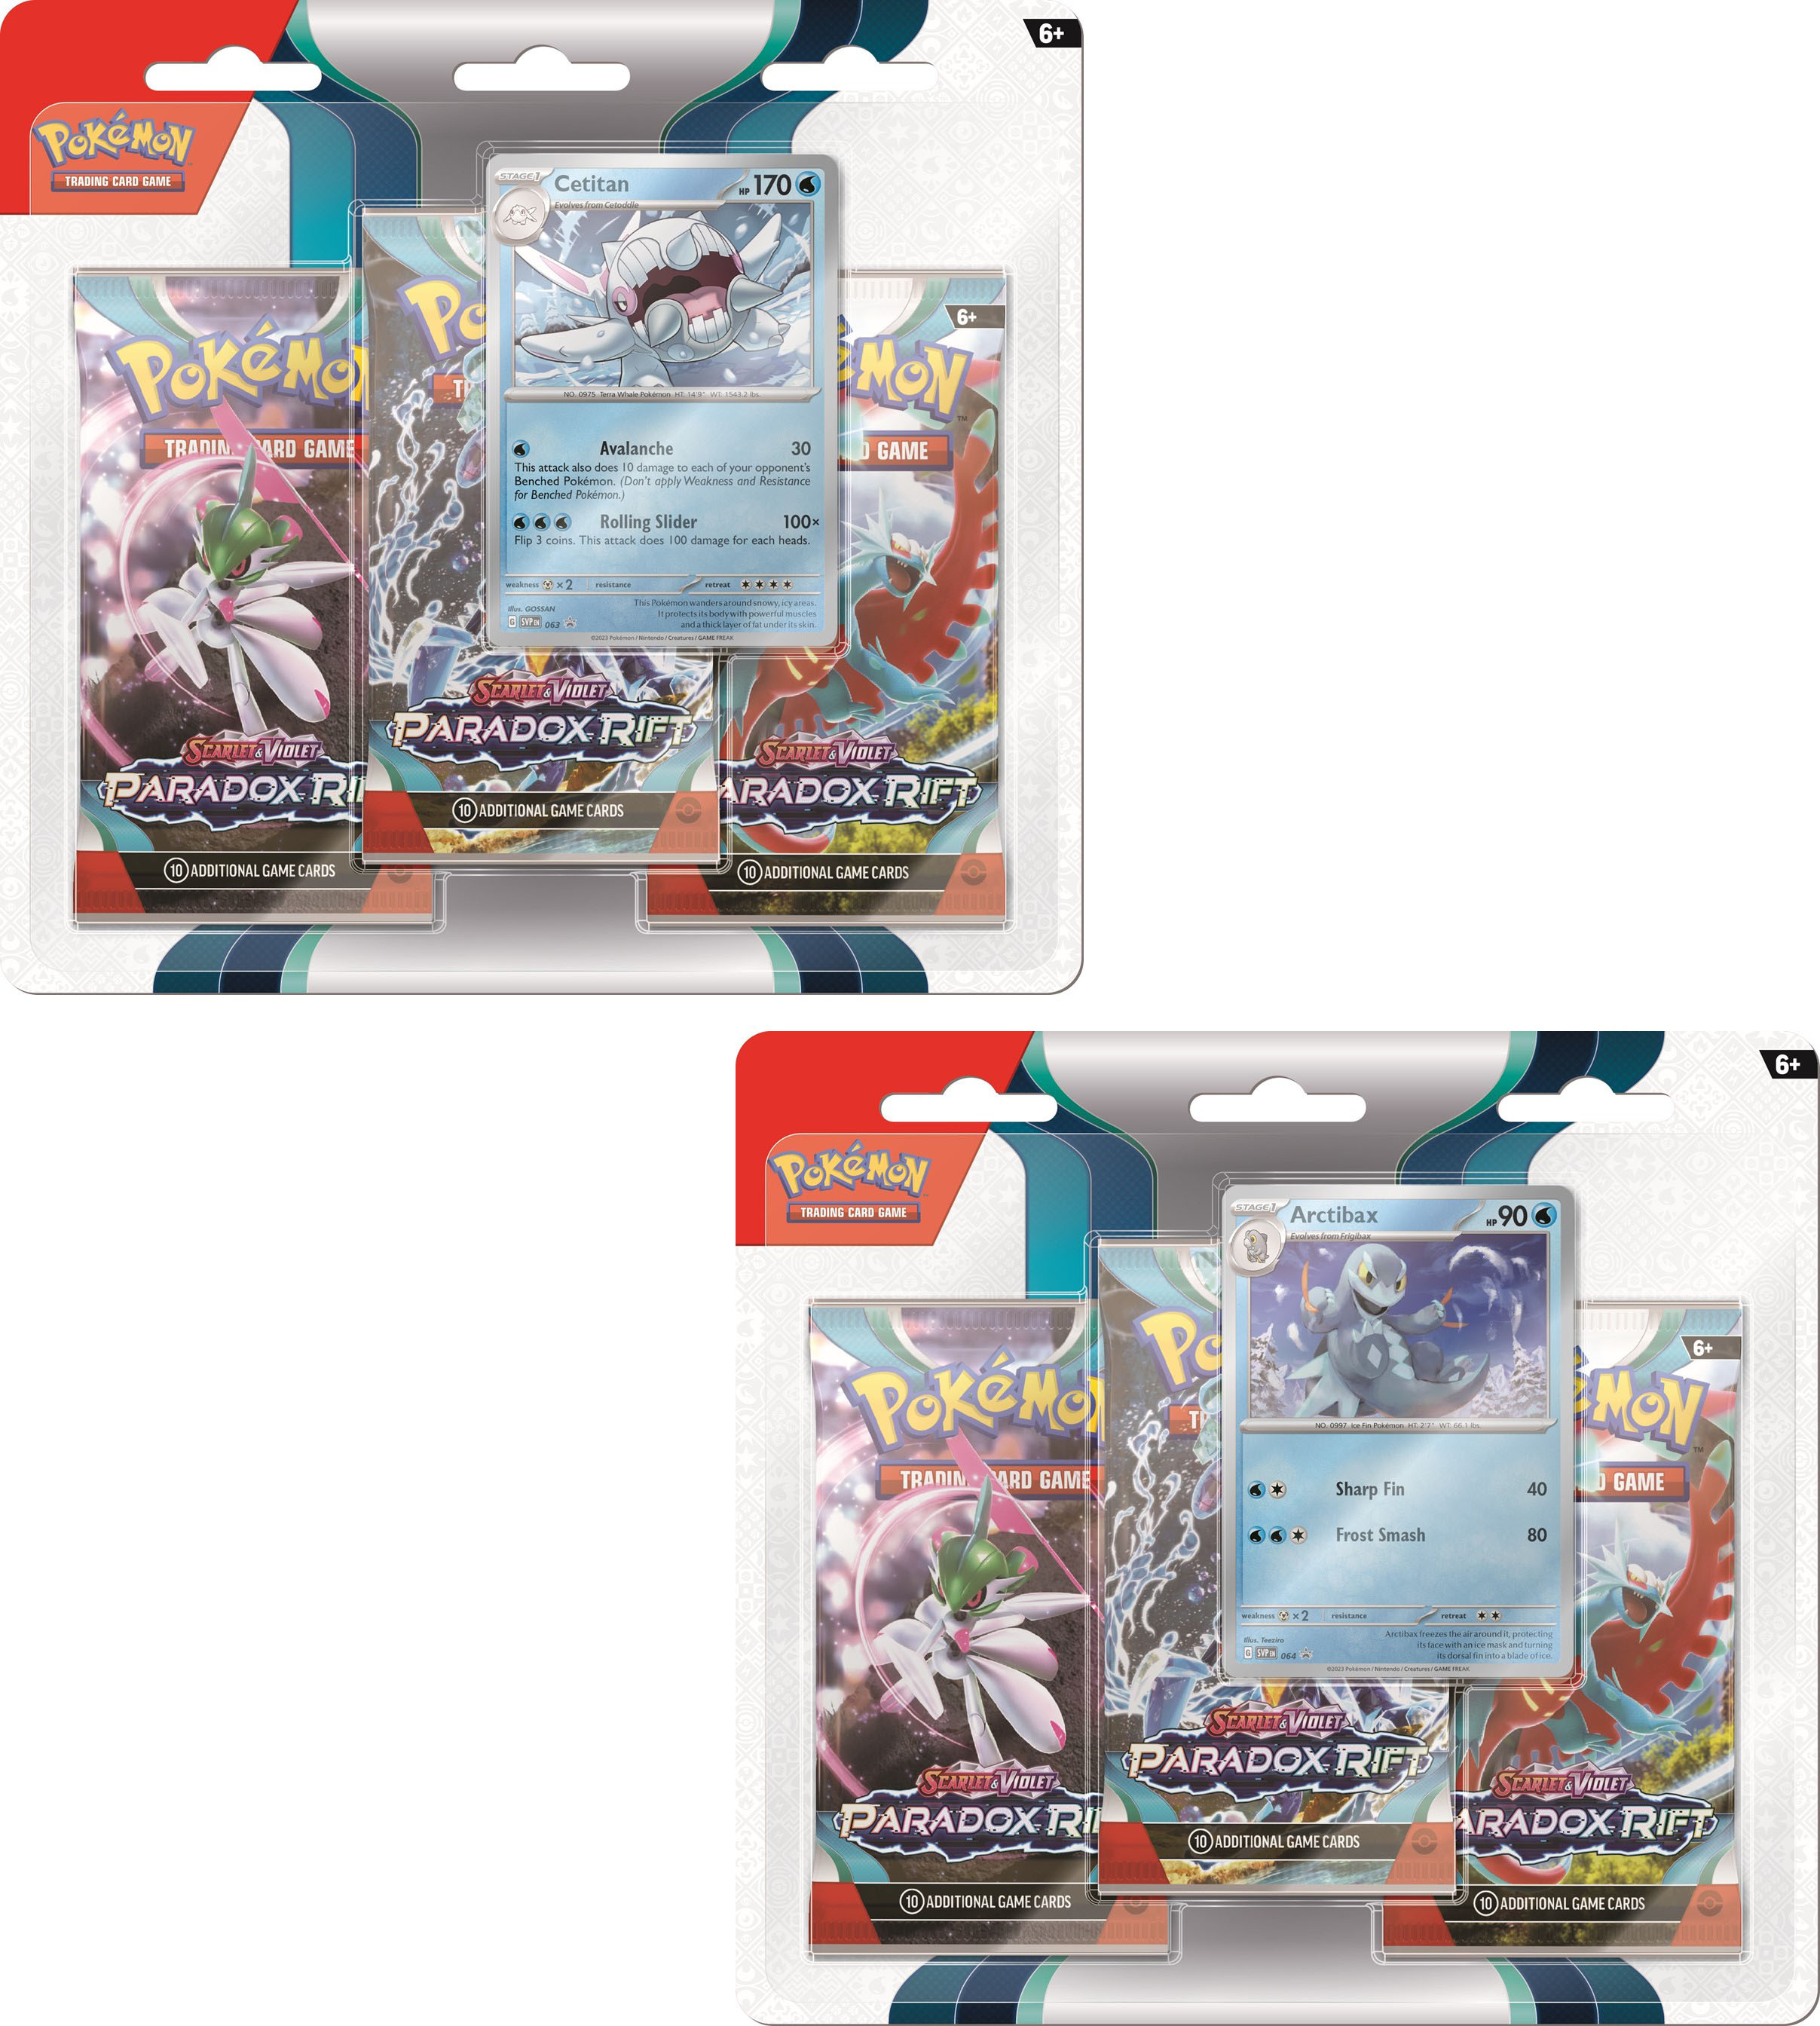 Pokémon Trading Card Game: Scarlet & Violet Paradox Rift 6pk Booster Bundle  187-87412 - Best Buy